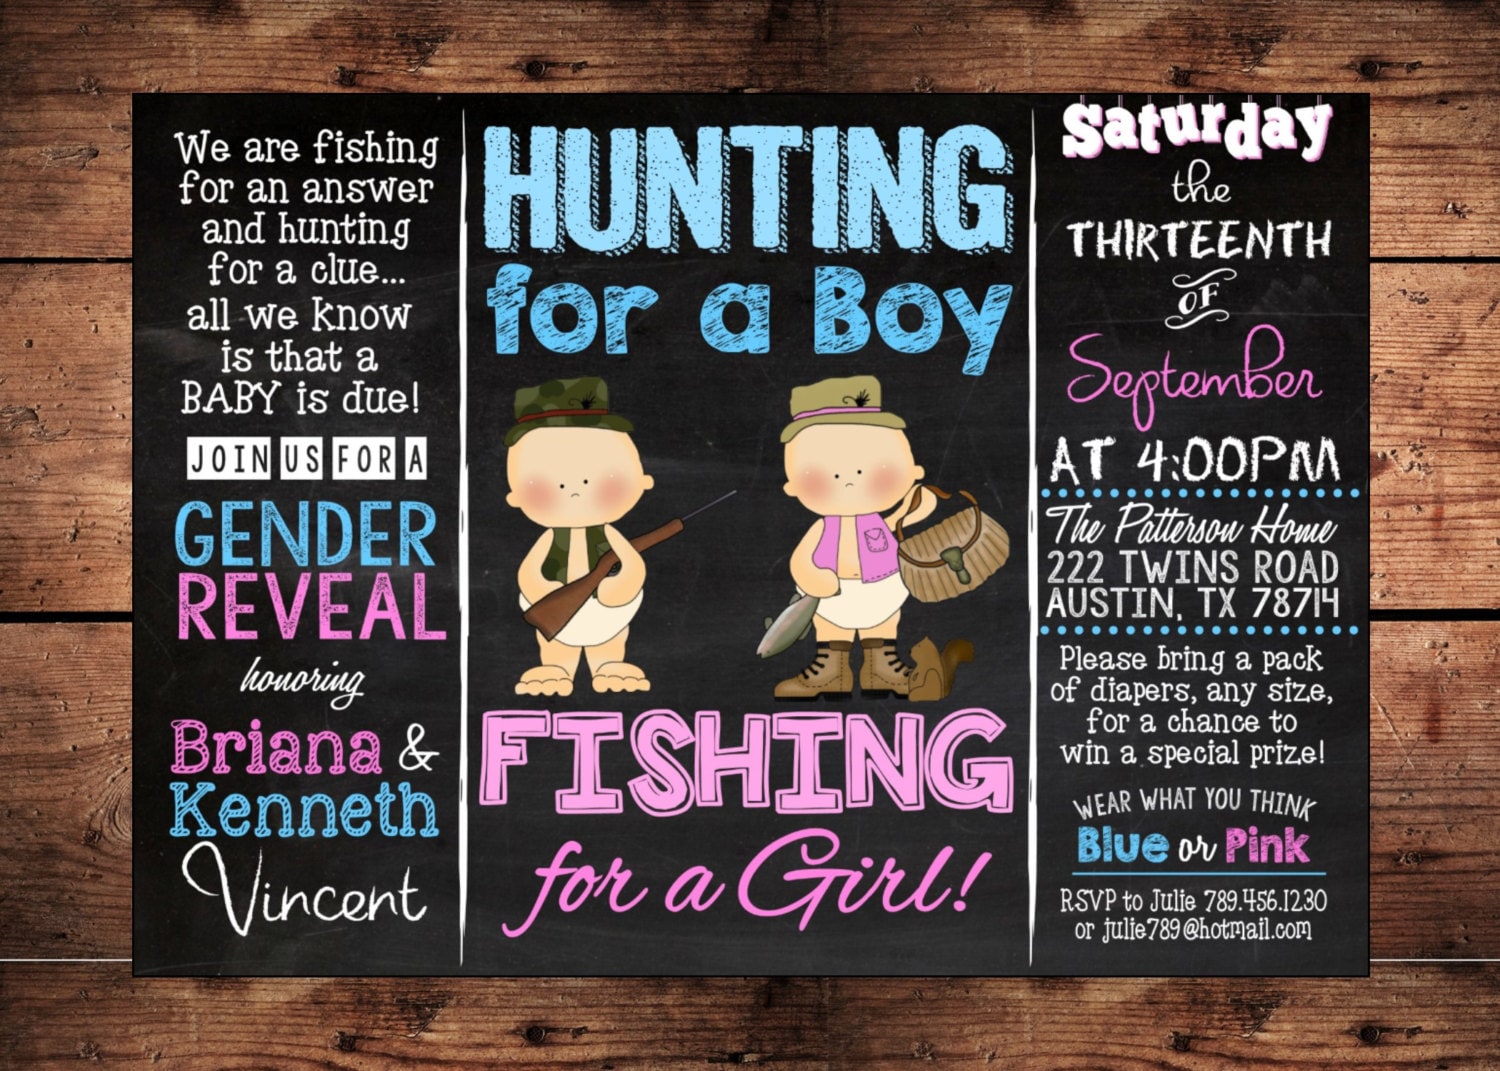 Fish Gender Reveal Banner 